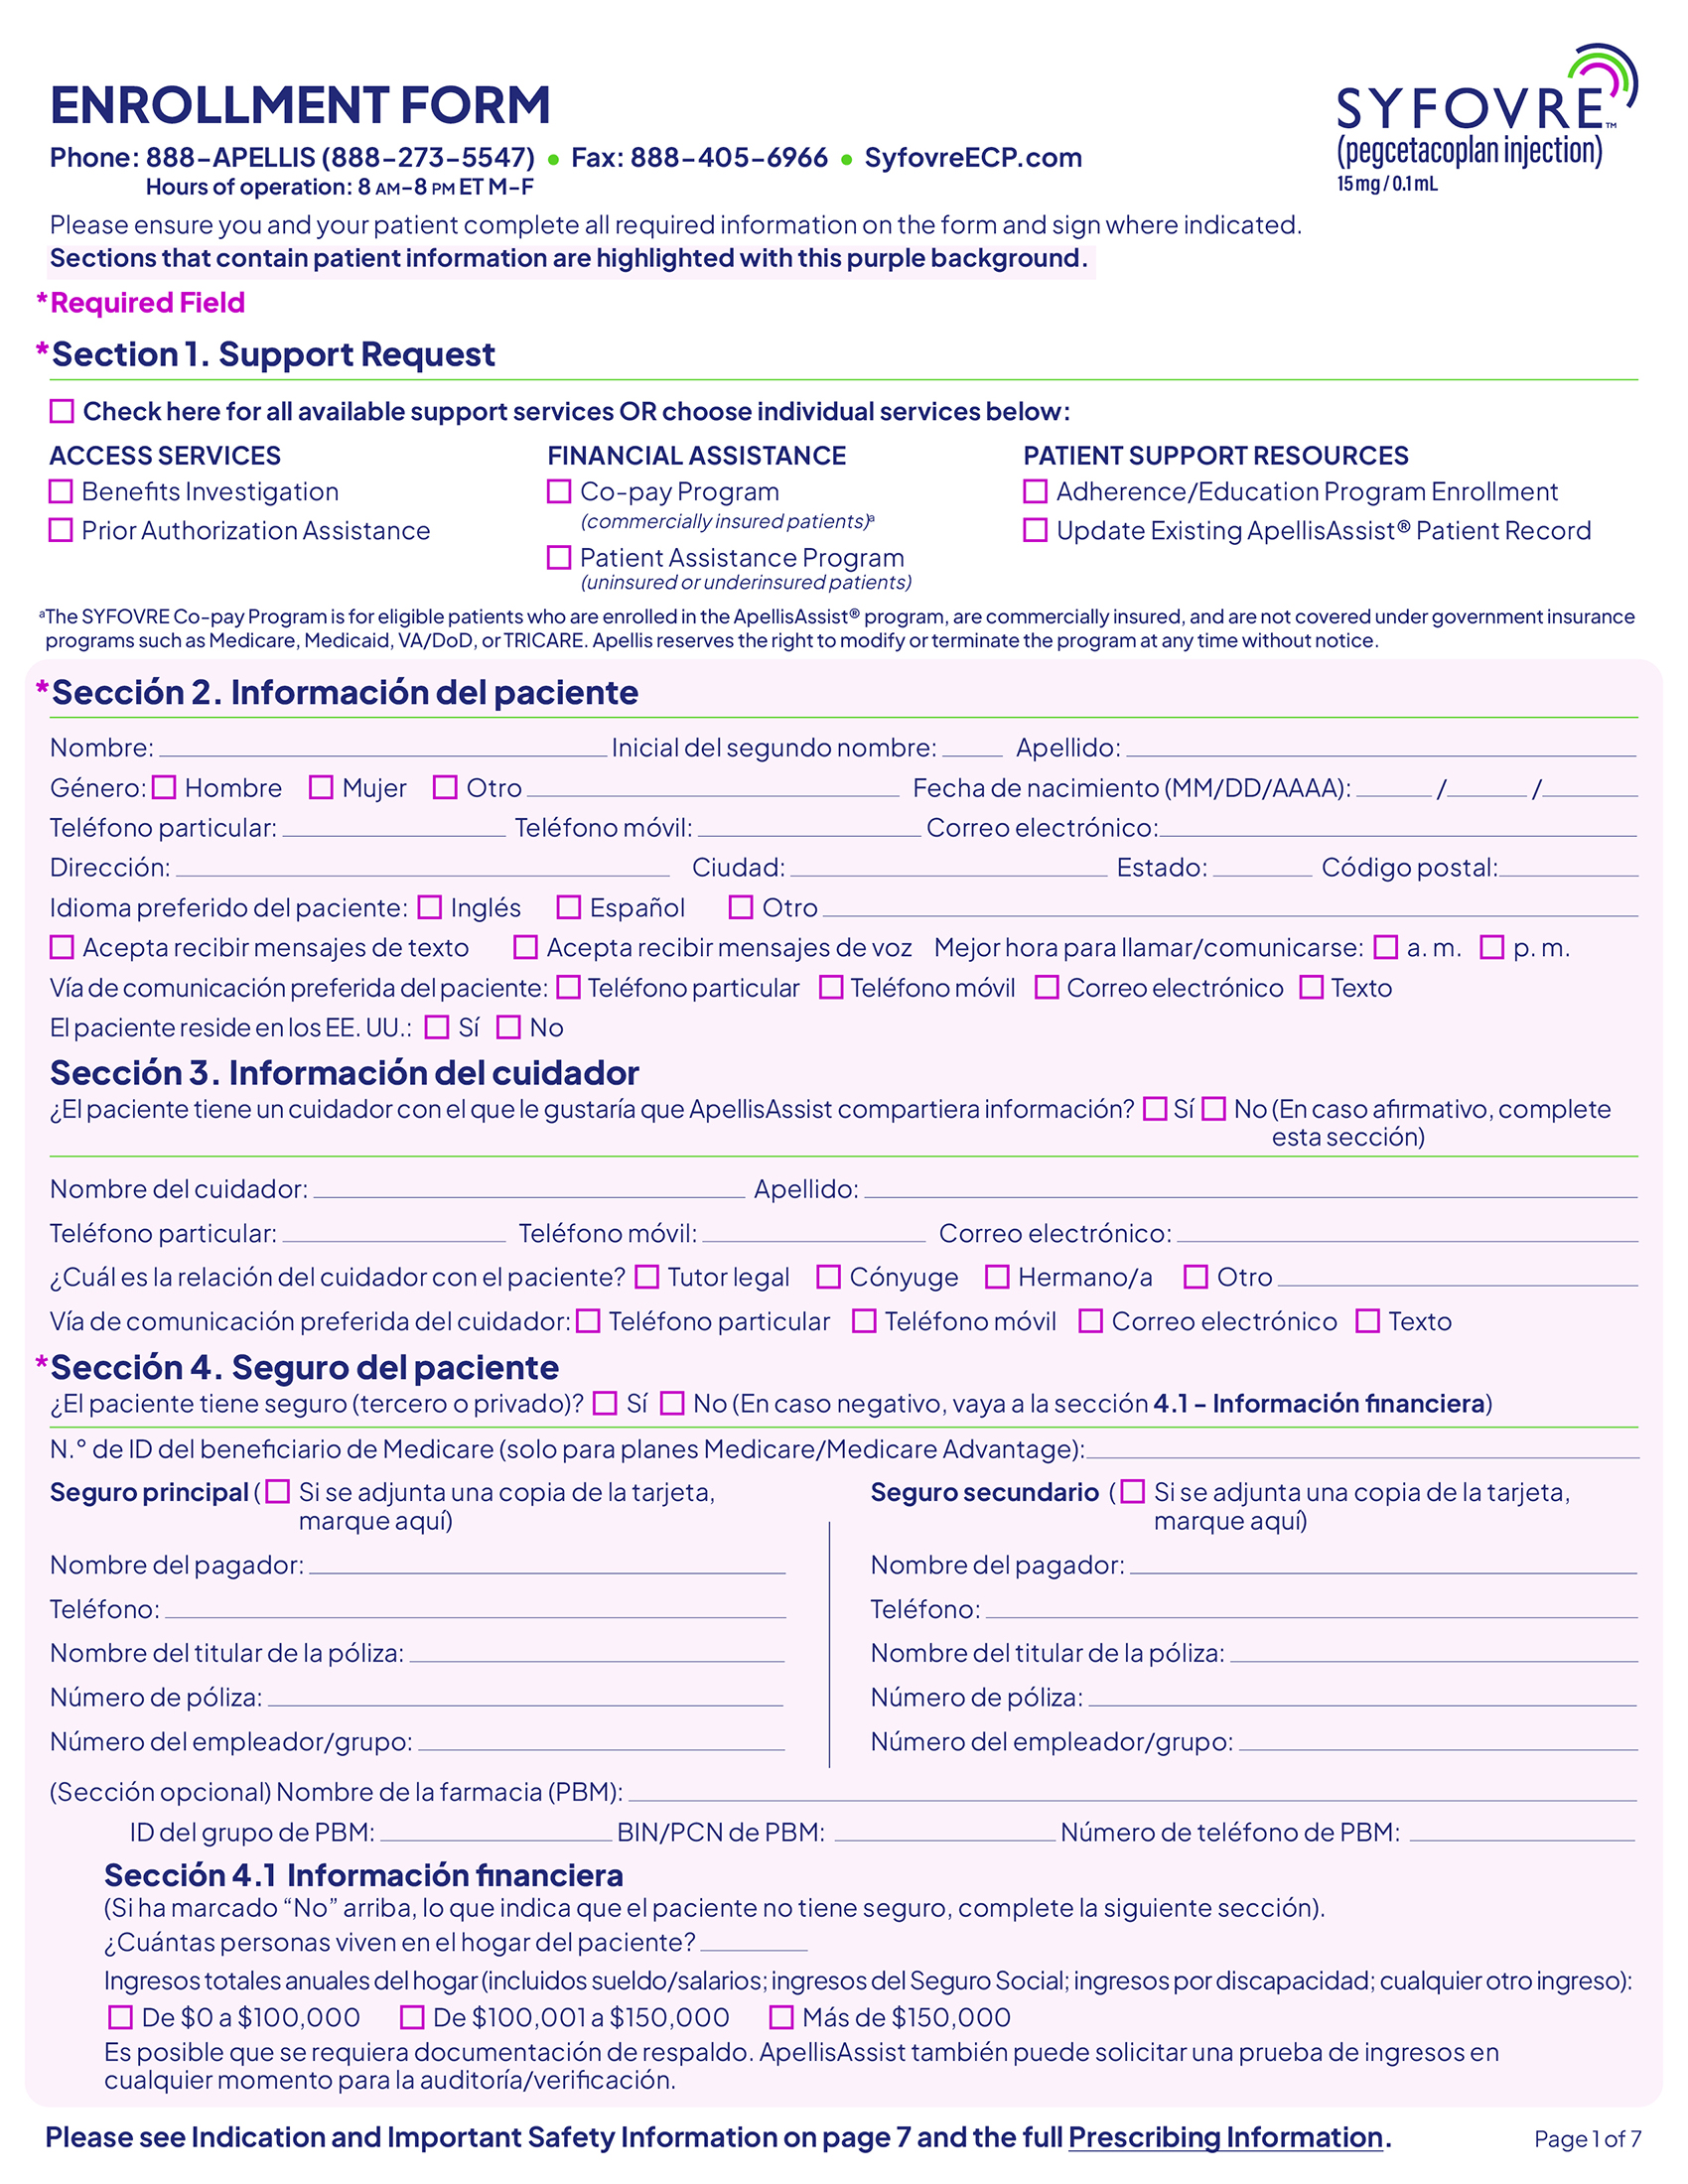 SYFOVRE® (pegcetacoplan injection) Spanish ApellisAssist Enrollment Form thumbnail